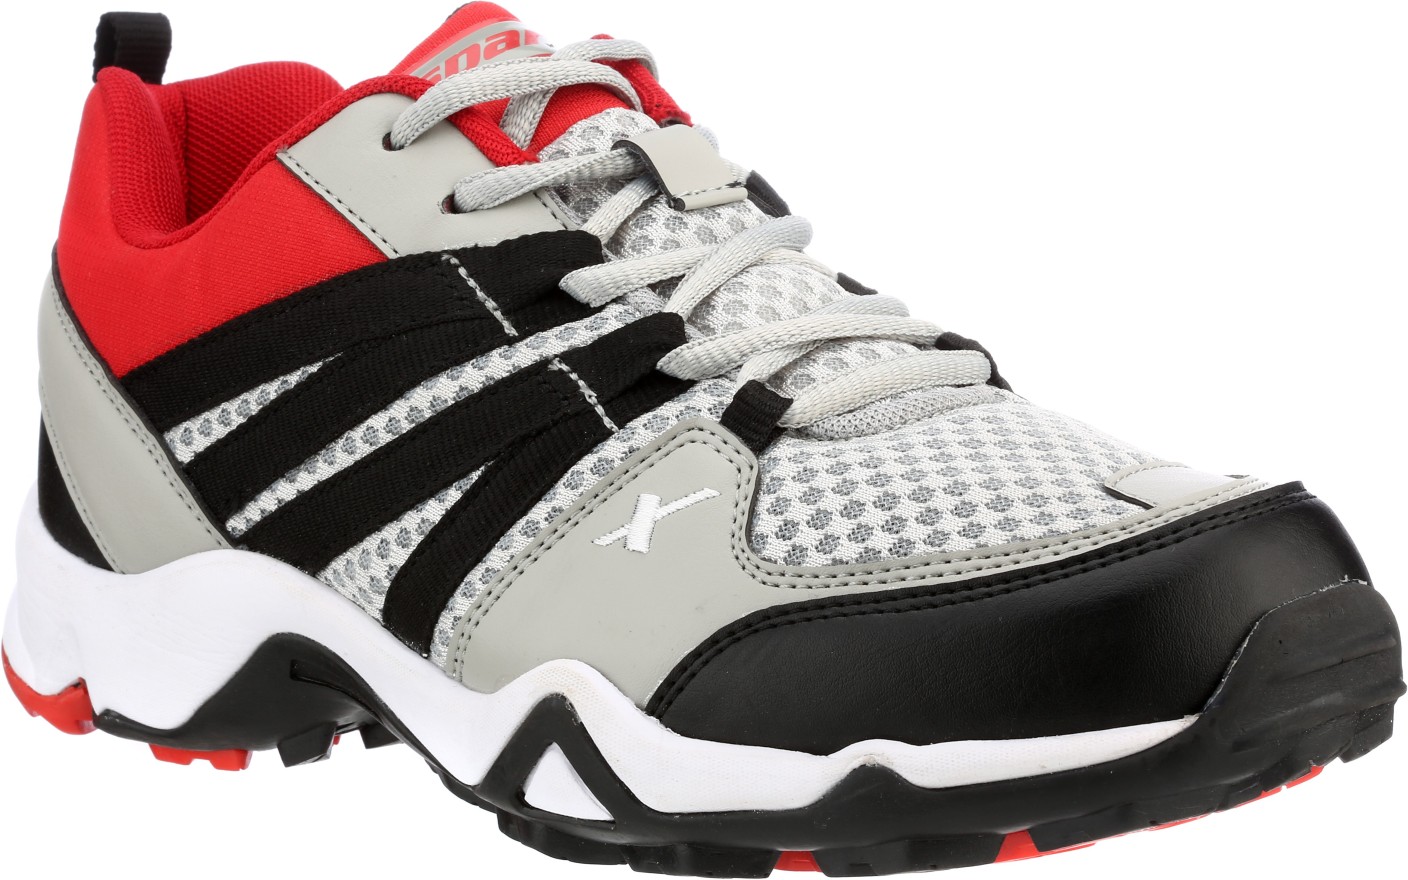 Sparx 284 Running Shoes For Men - Buy Sparx 284 Running Shoes For Men ...